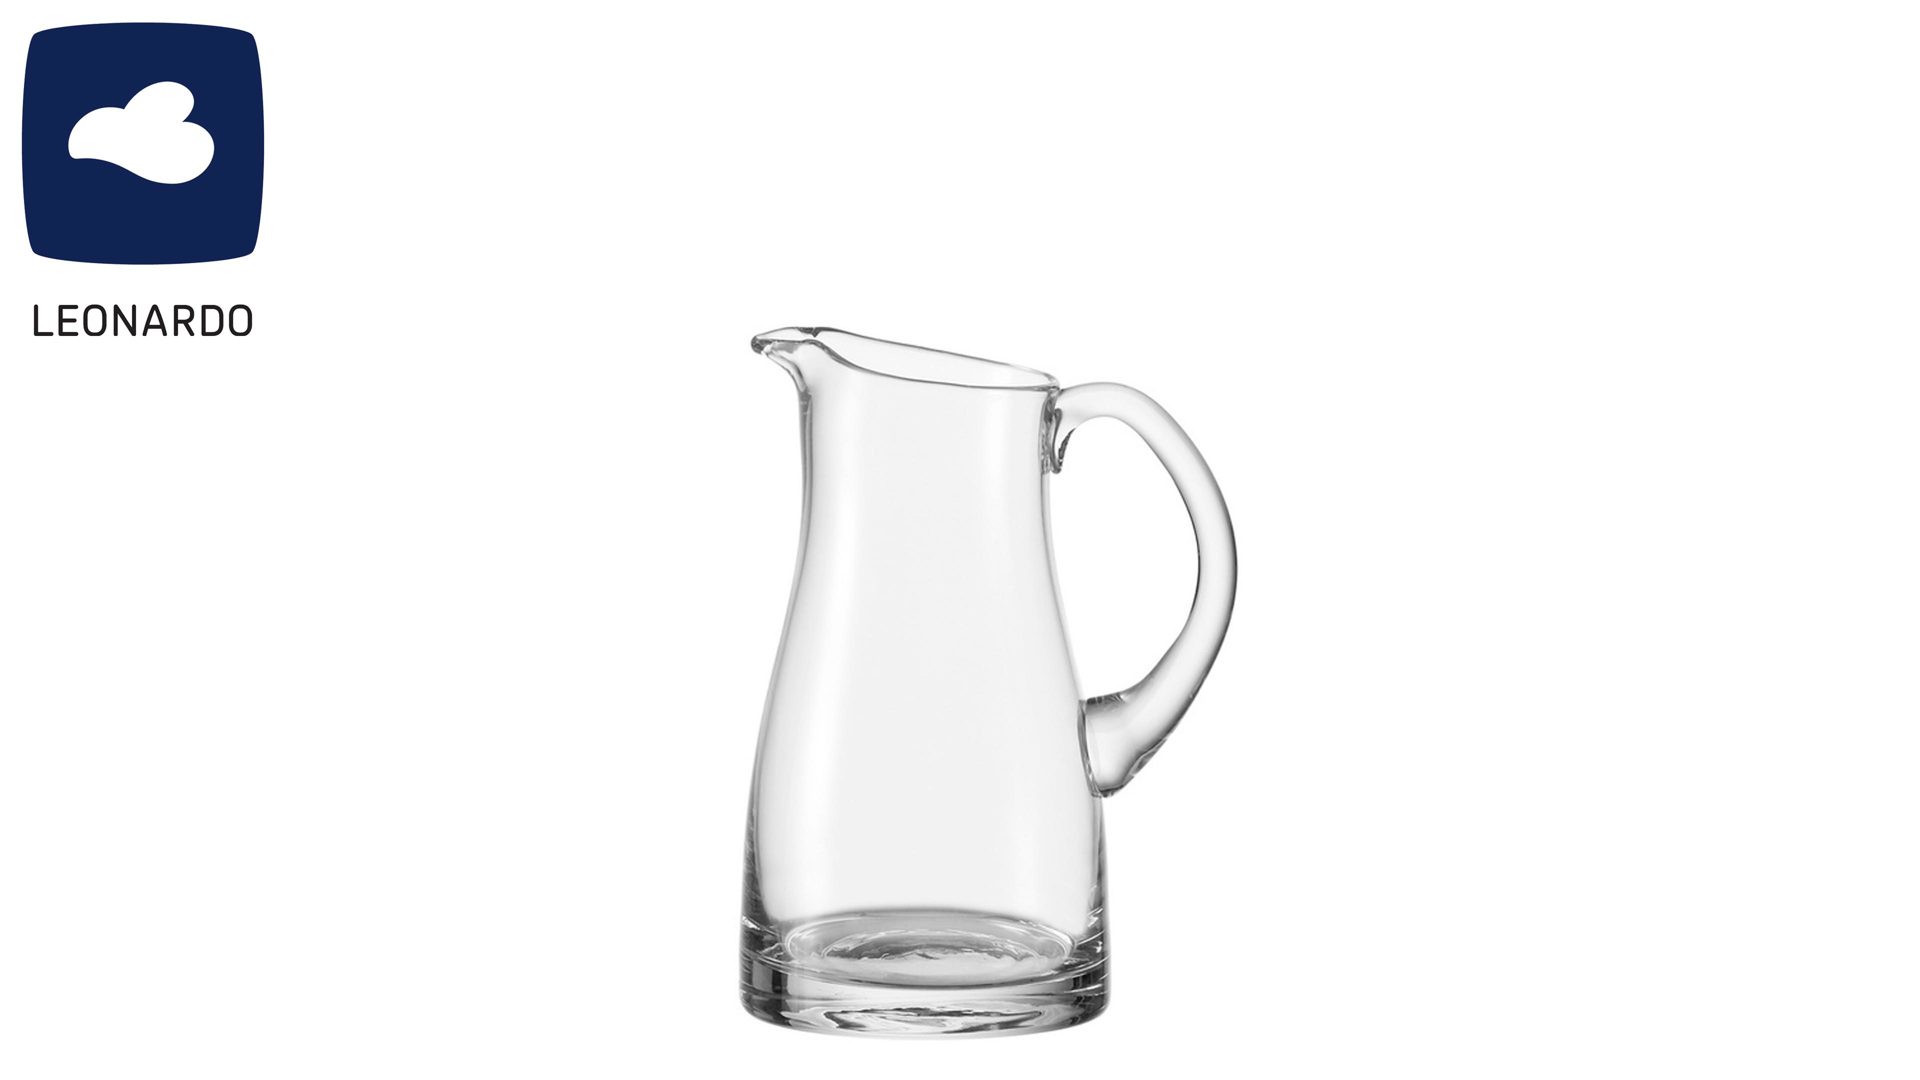 Krug Leonardo | glaskoch aus Glas in Transparent LEONARDO Glaskrug Liquid Klarglas - ca. 1,2 Liter Fassungsvermögen